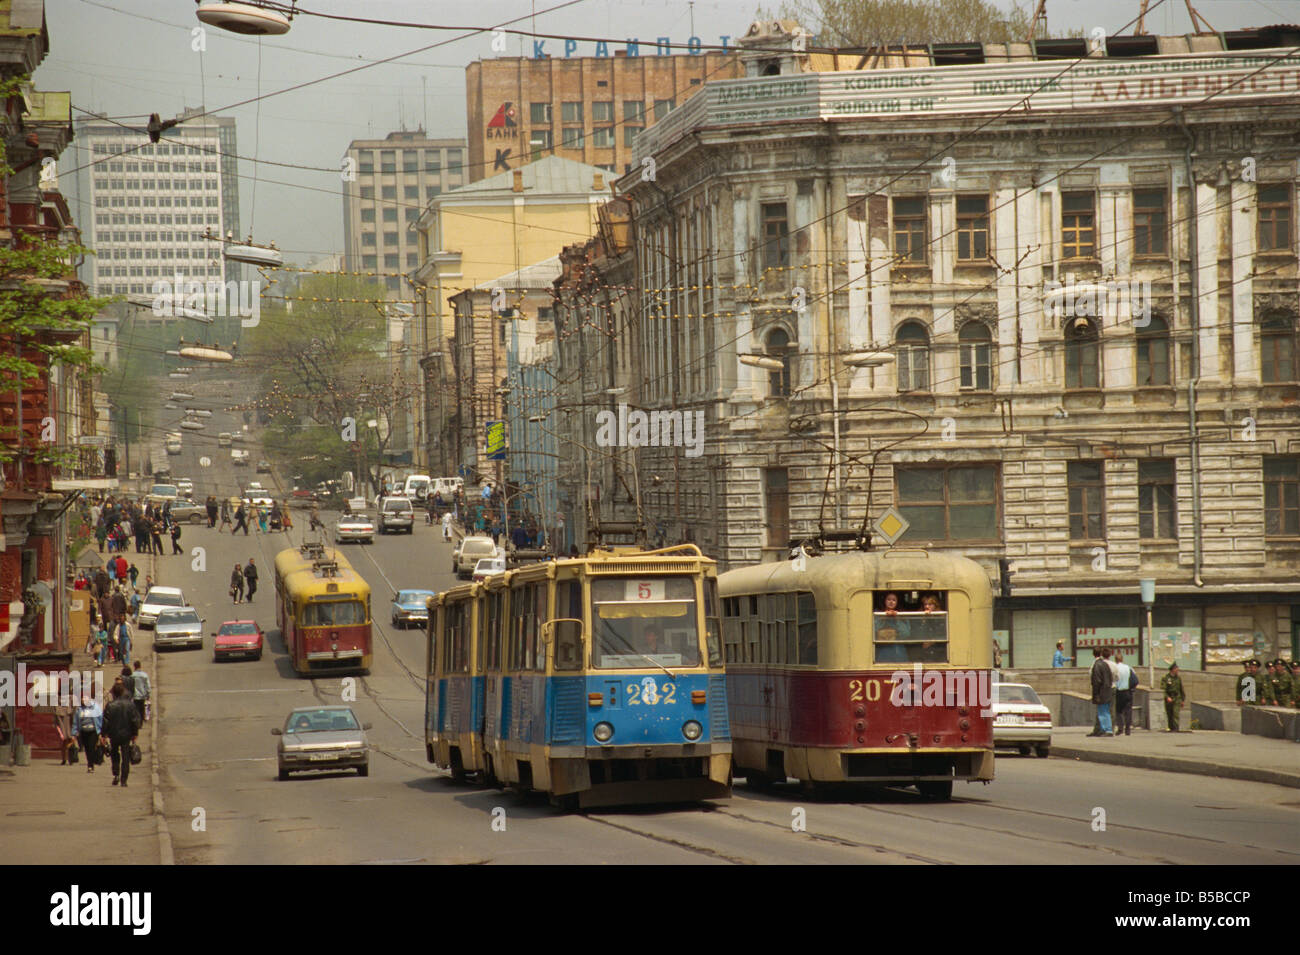 Trams in the street Vladivostok Russian Far East Russia Europe Stock Photo